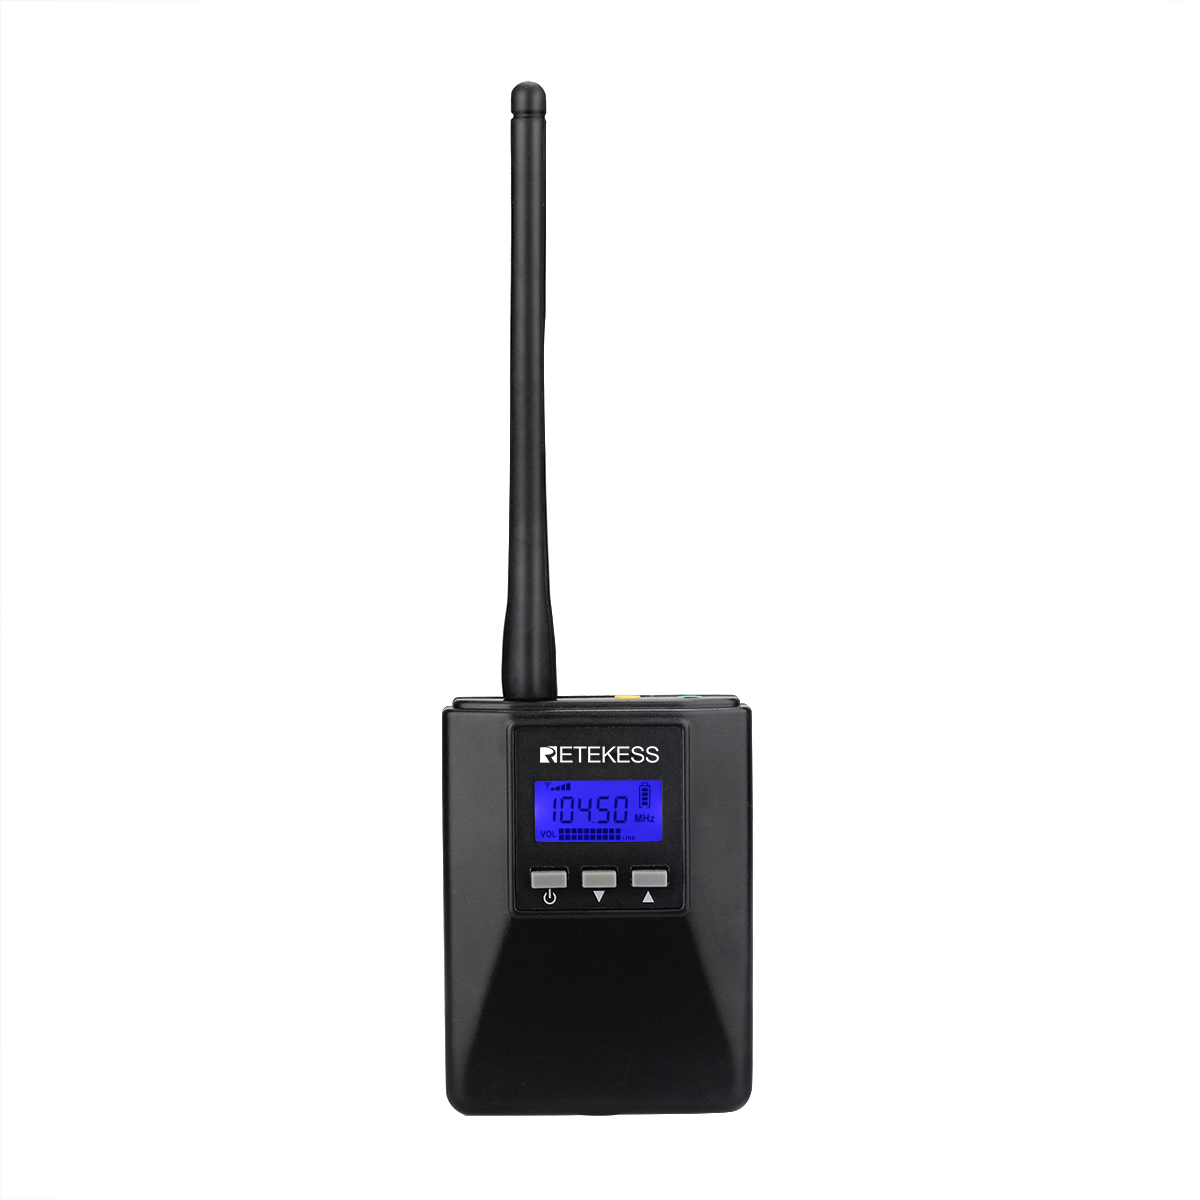 Retekess TR506 Portable Transmitter Mini Low Power Transmitter Support Microphone and Audio Input for Tour Guide Church Interpretation